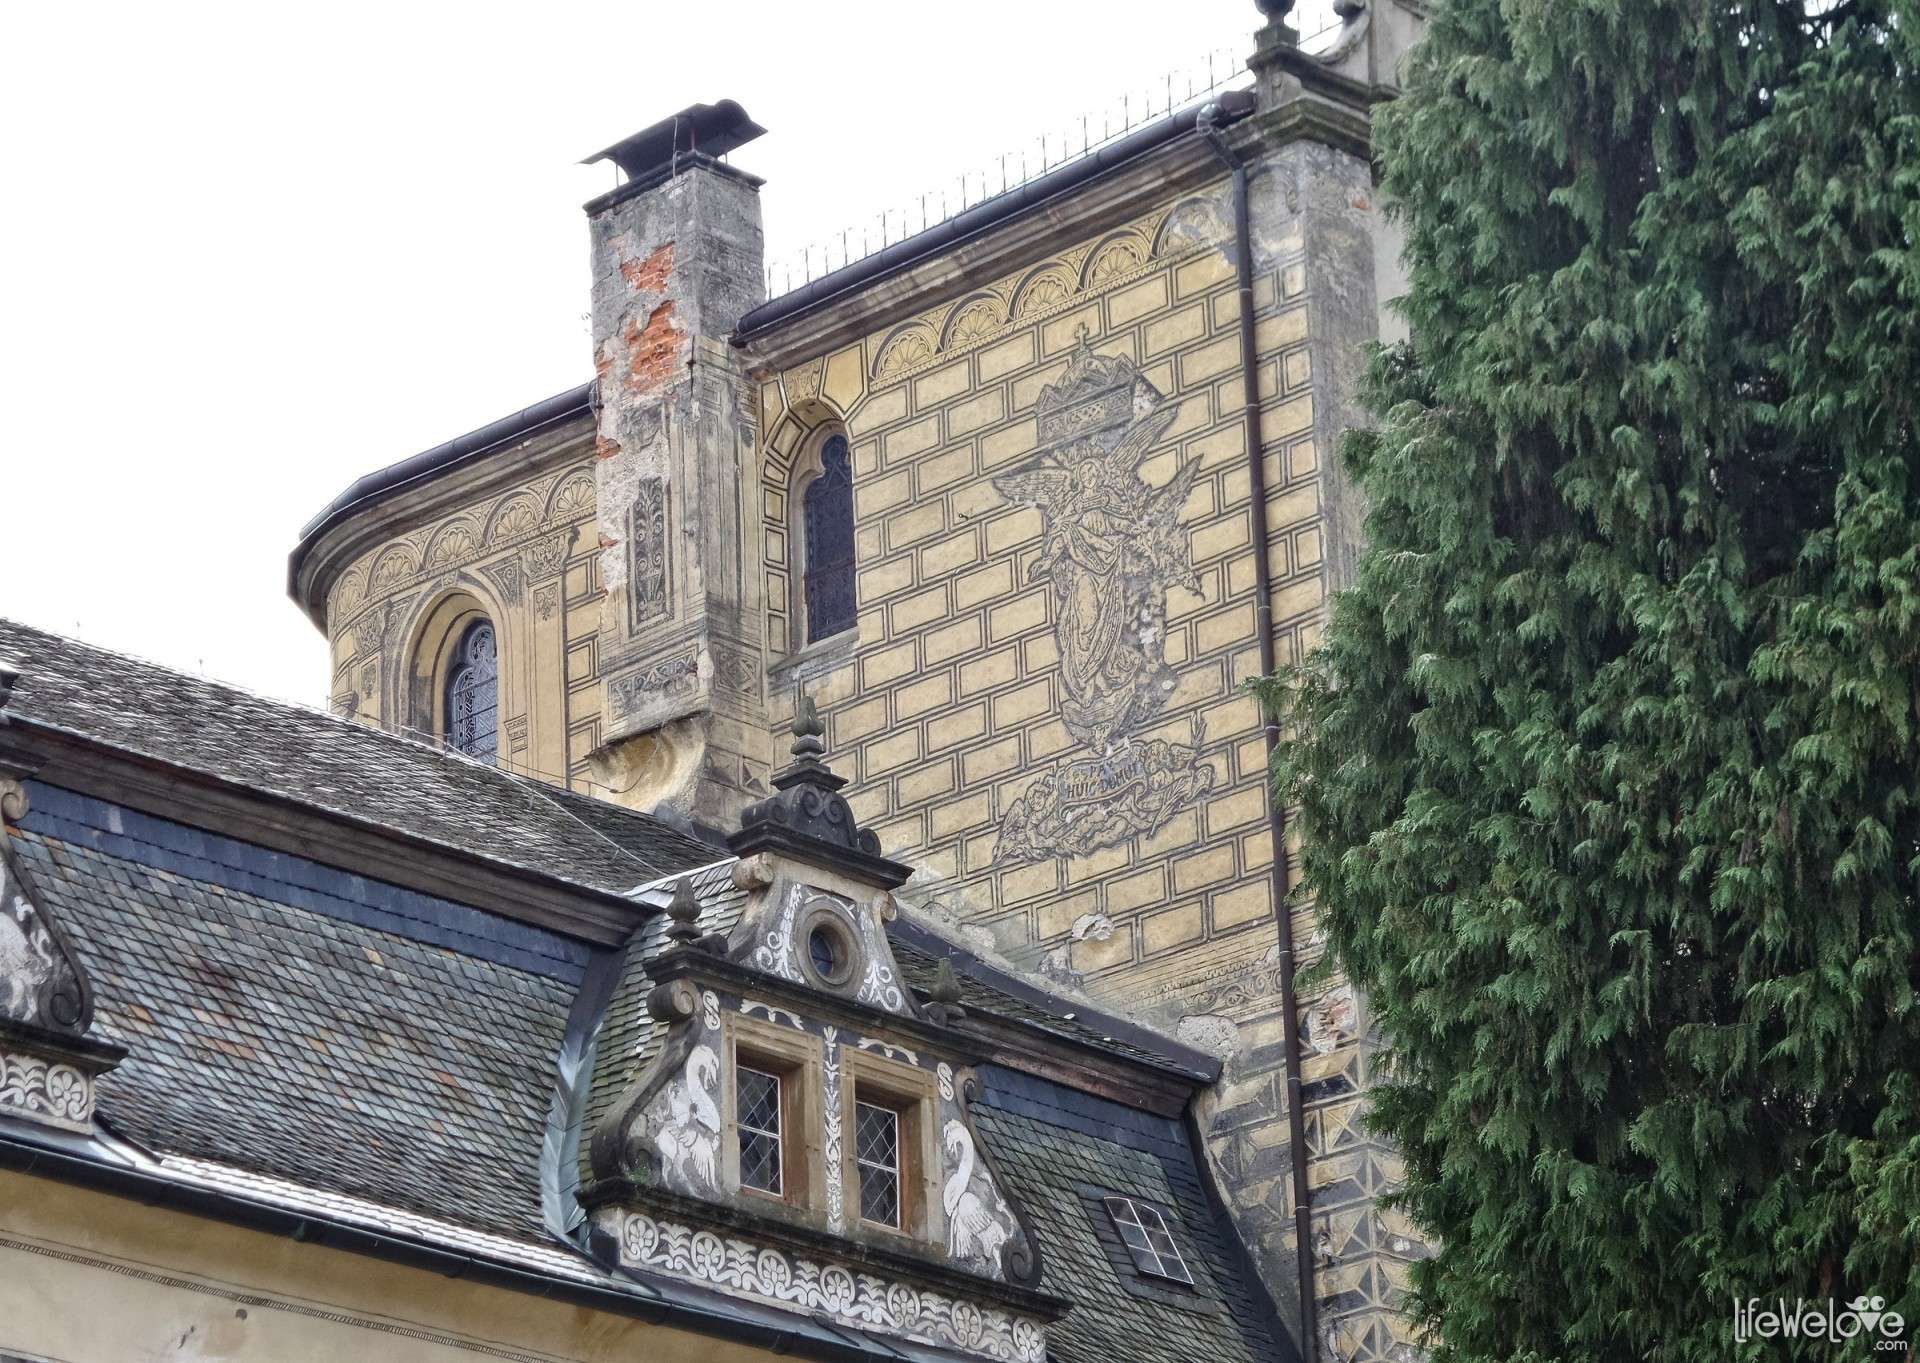 Frydlant Castle Wallpapers